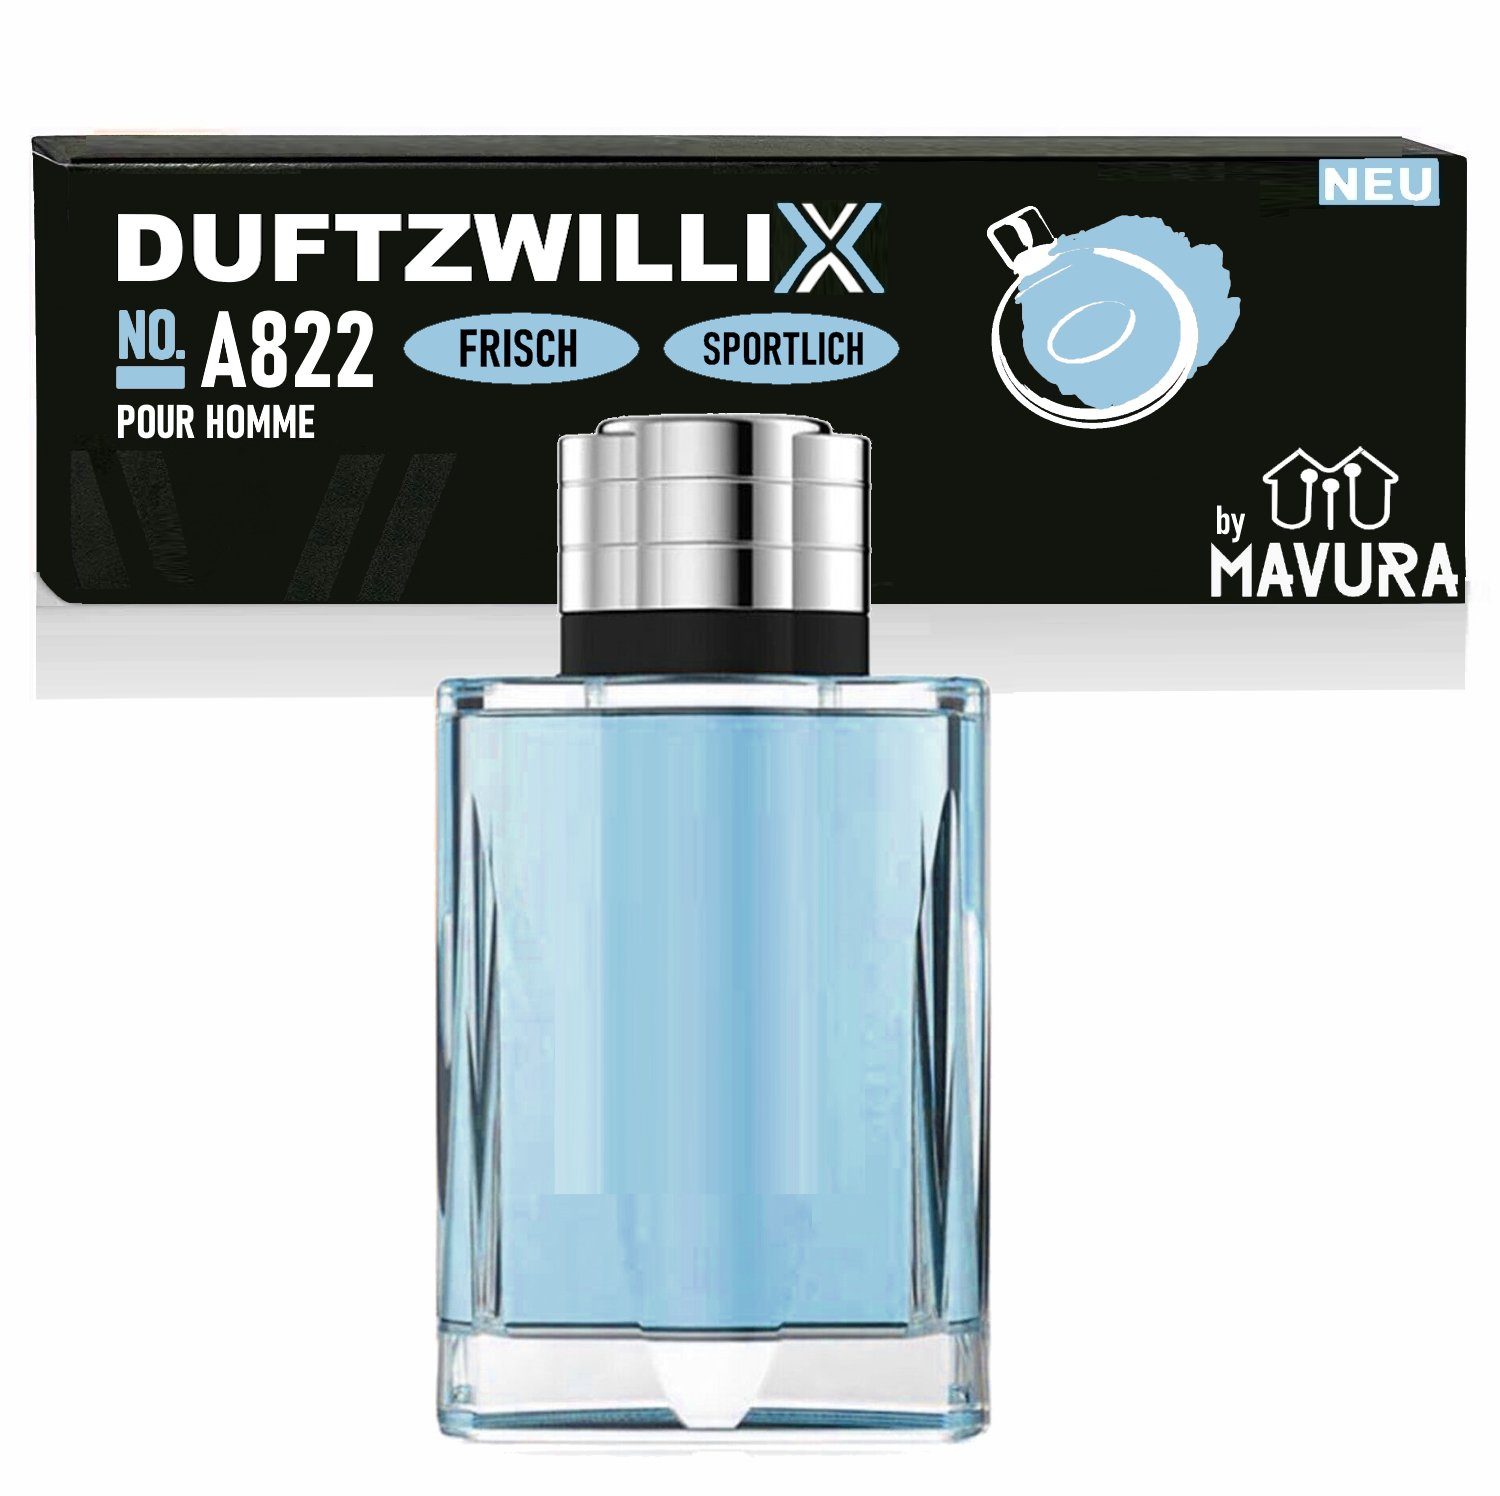 MAVURA Eau de Parfum DUFTZWILLIX No. A822 - Parfüm für Herren - frischer sportlicher Duft, - 100ml - Duftzwilling / Dupe Sale